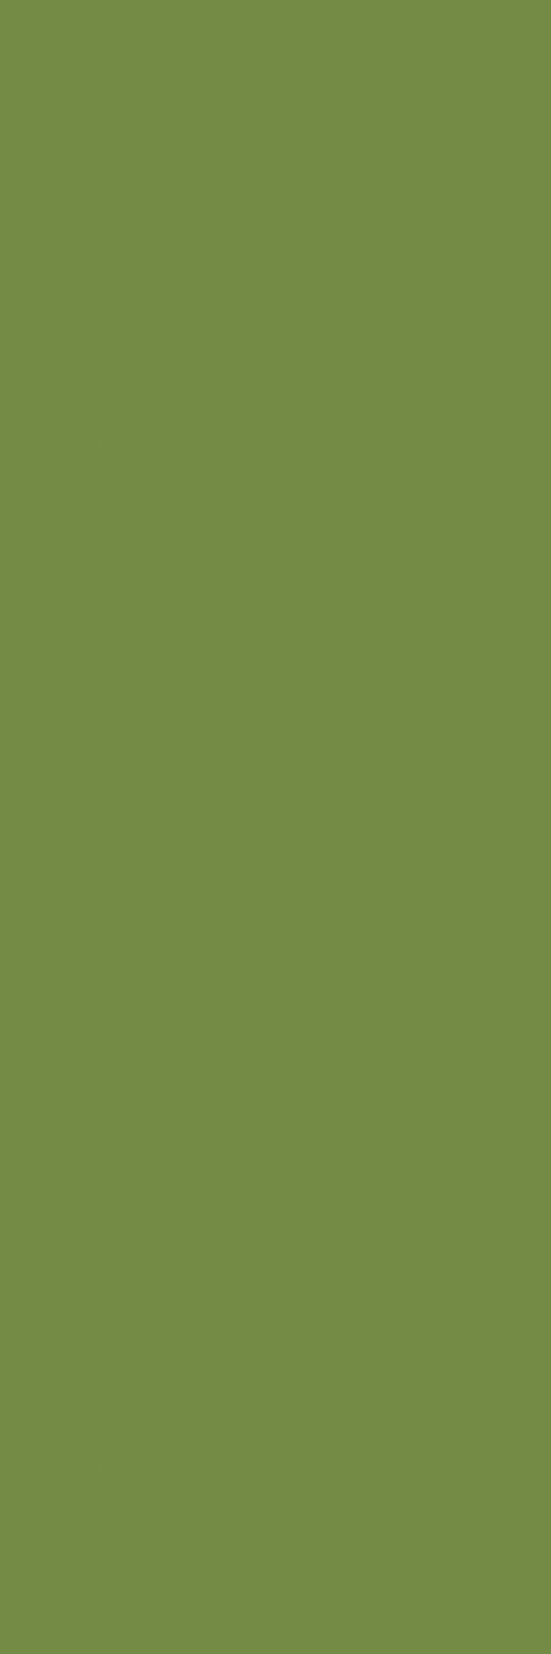 DuPont Corian Blooming Green